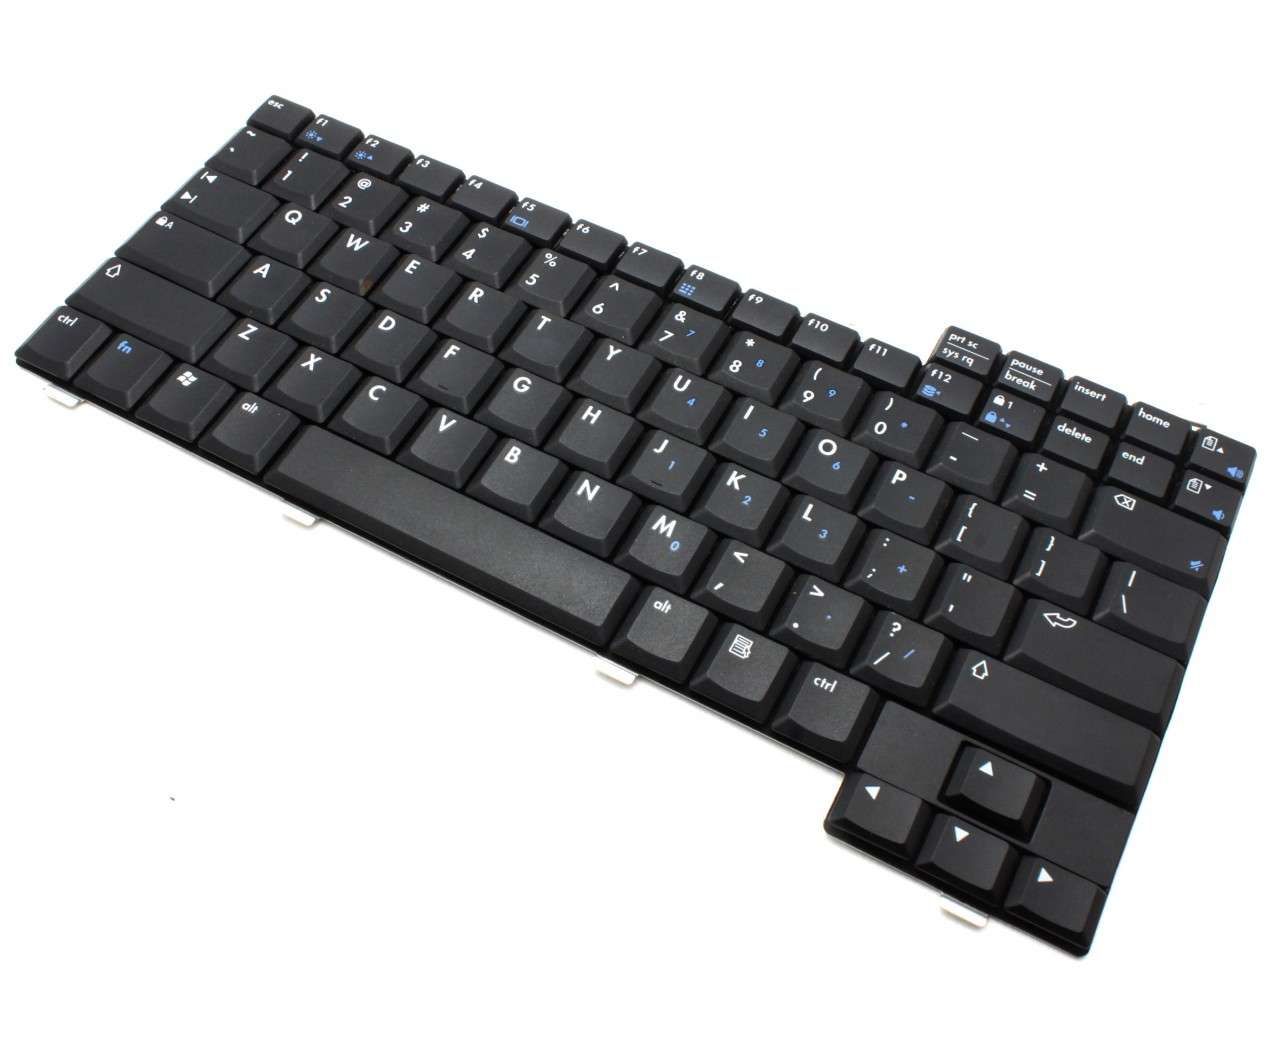 Tastatura HP Compaq Presario 1115